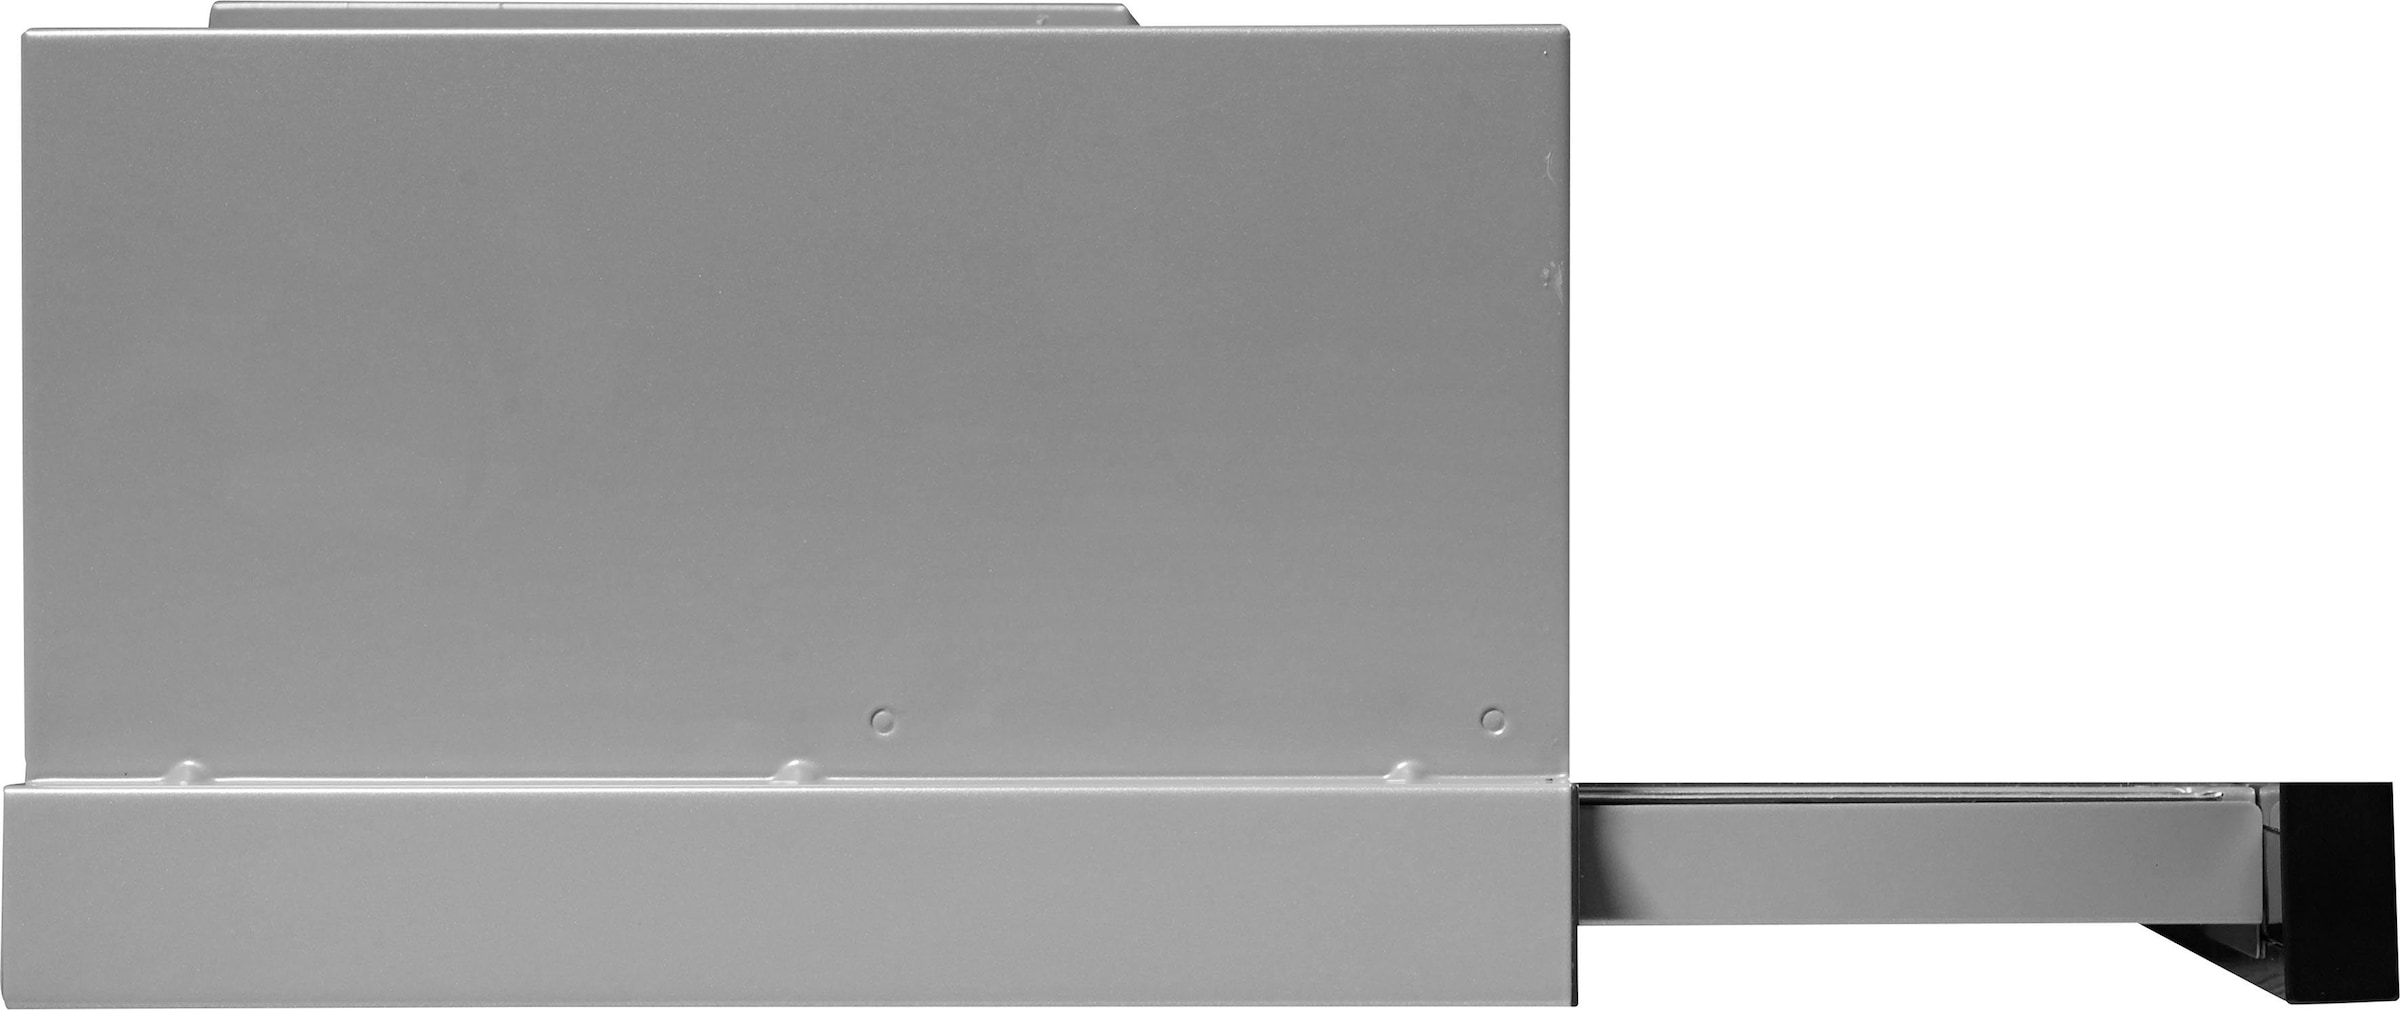 Flachschirmhaube 60 cm »SY-6002C-P1-C84-L22-600«, Hanseatic bei online